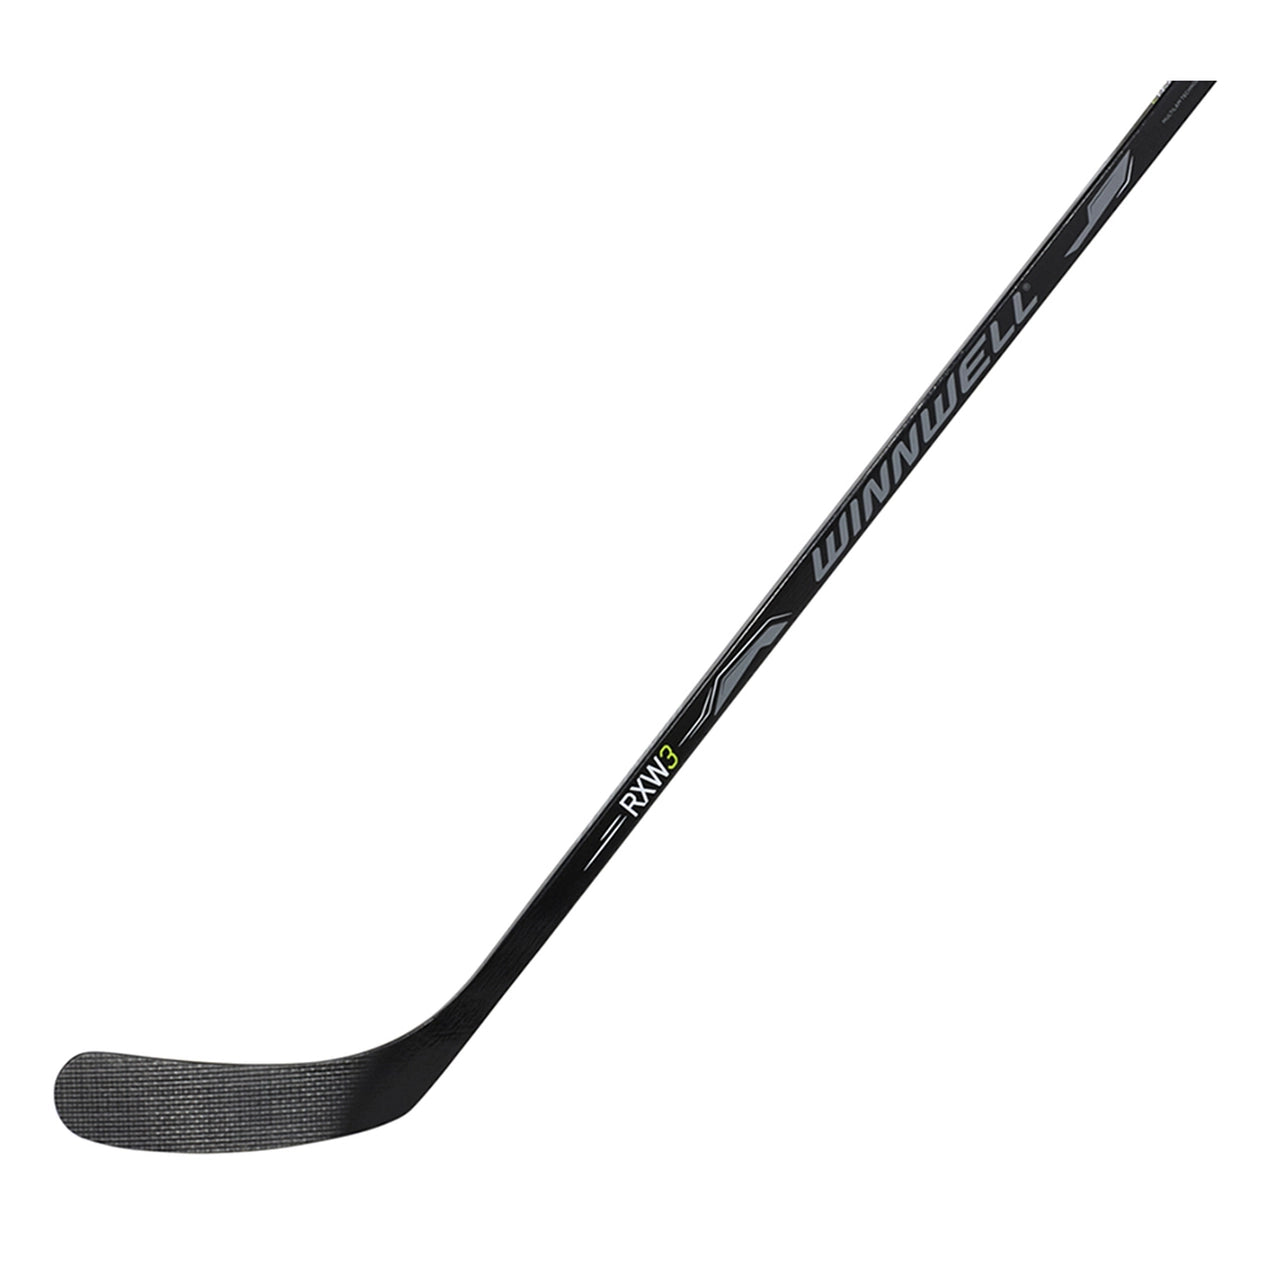 Winnwell Hockey Stick Size 59 In Left Hand RXW3 Flex PS119